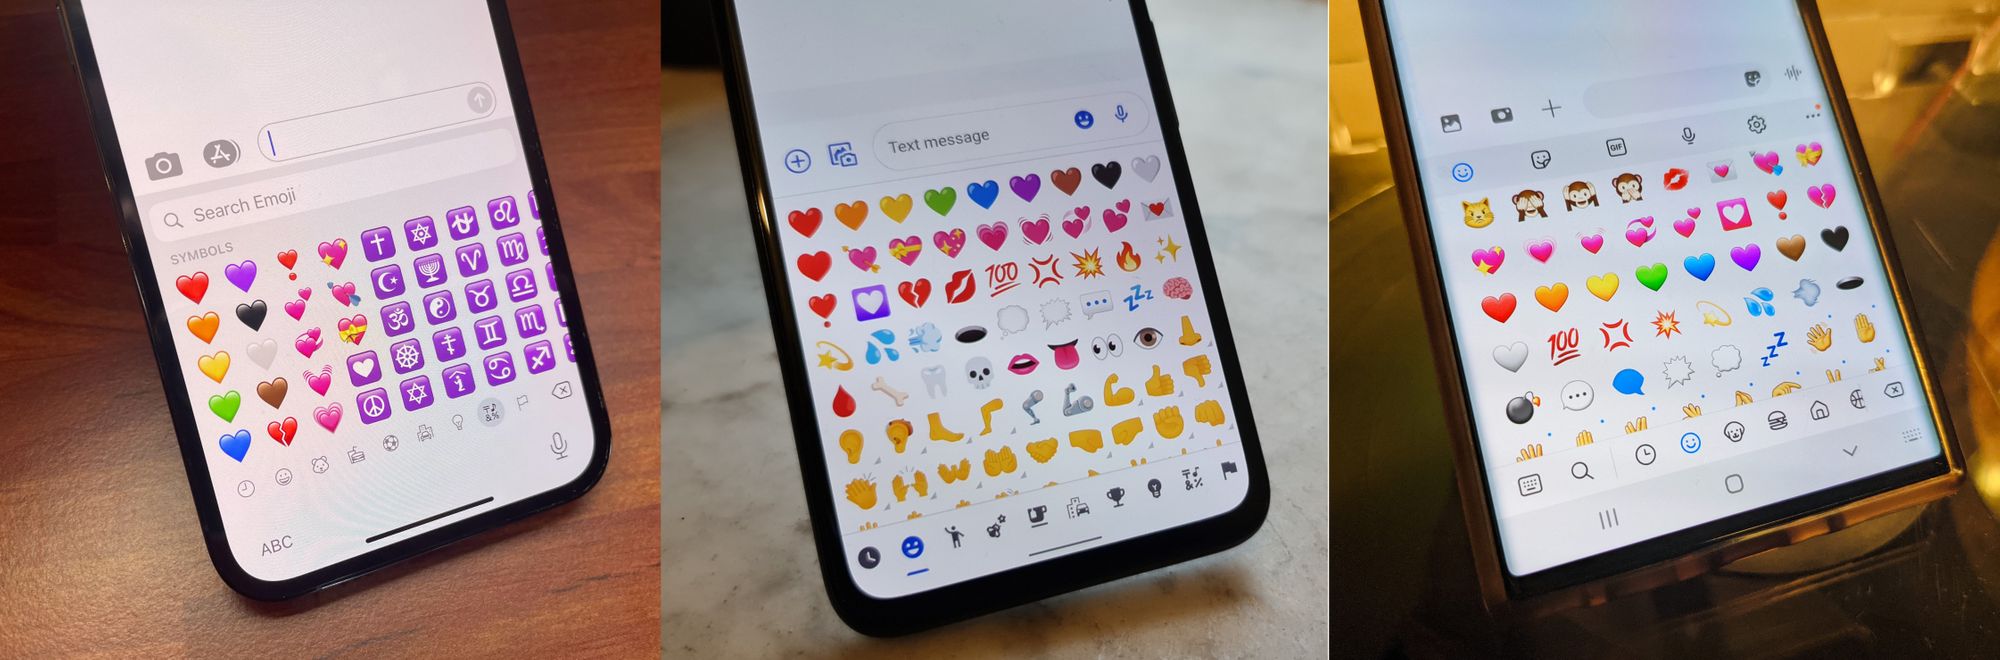 heart-emoji-keyboard-iphone-pixel-galaxy